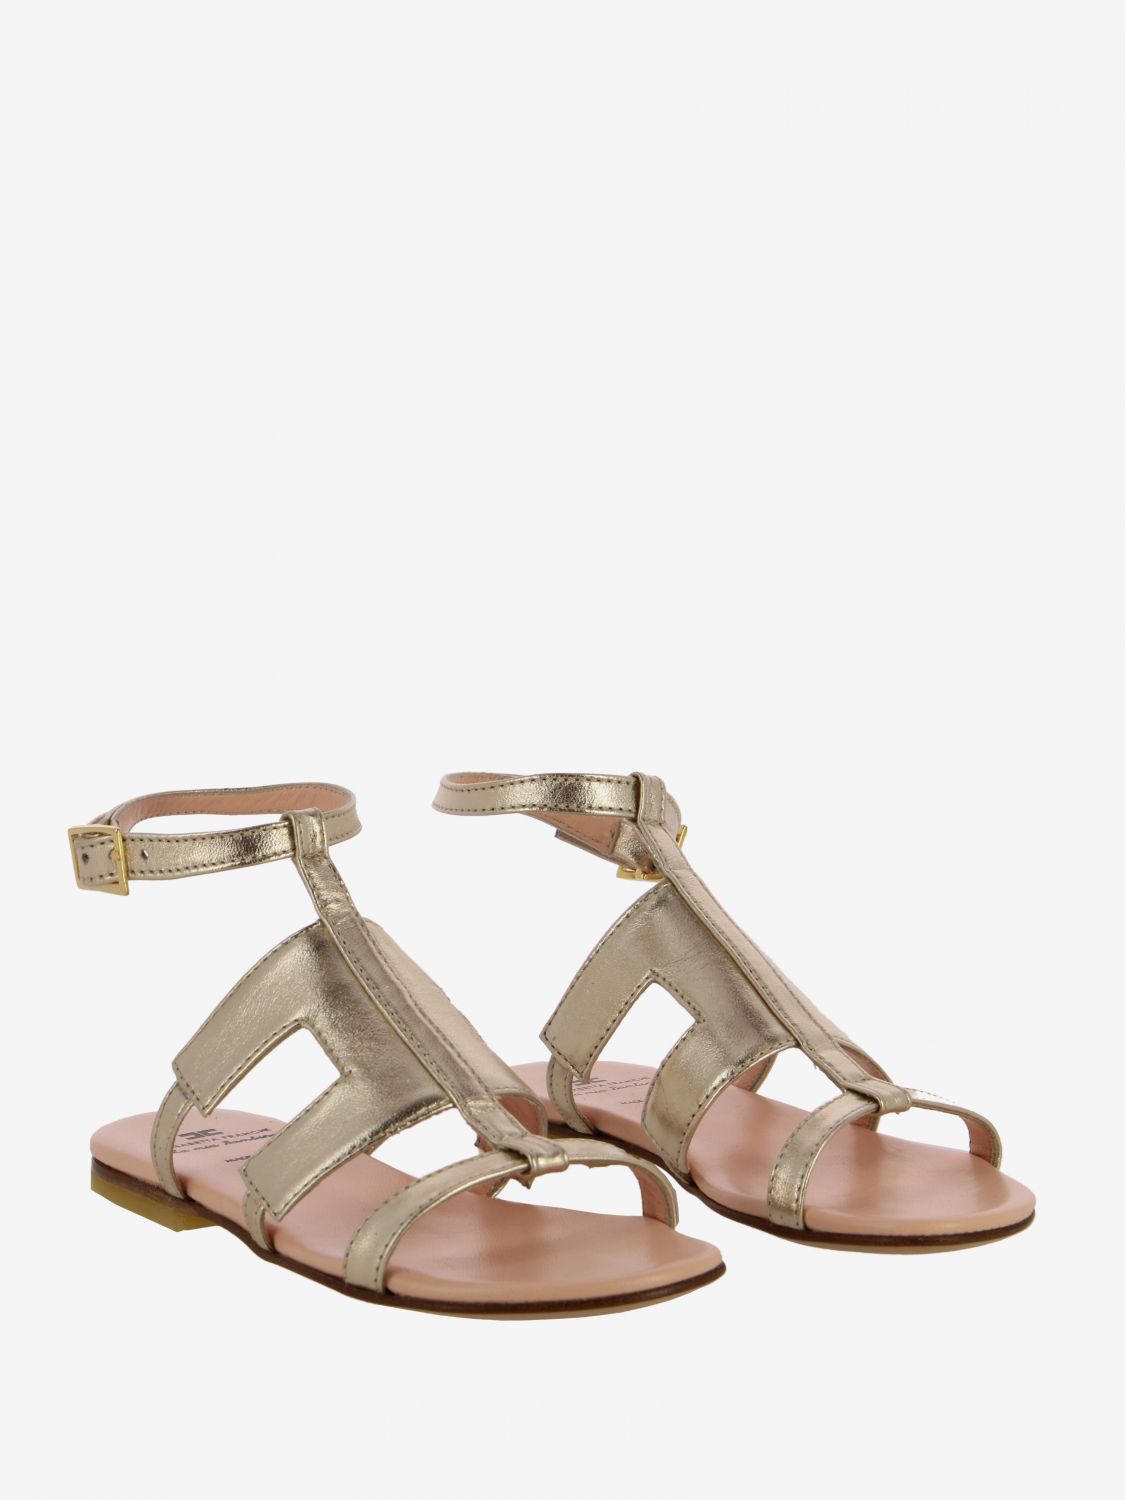 Elisabetta Franchi Outlet: sandal in laminated leather | Shoes ...